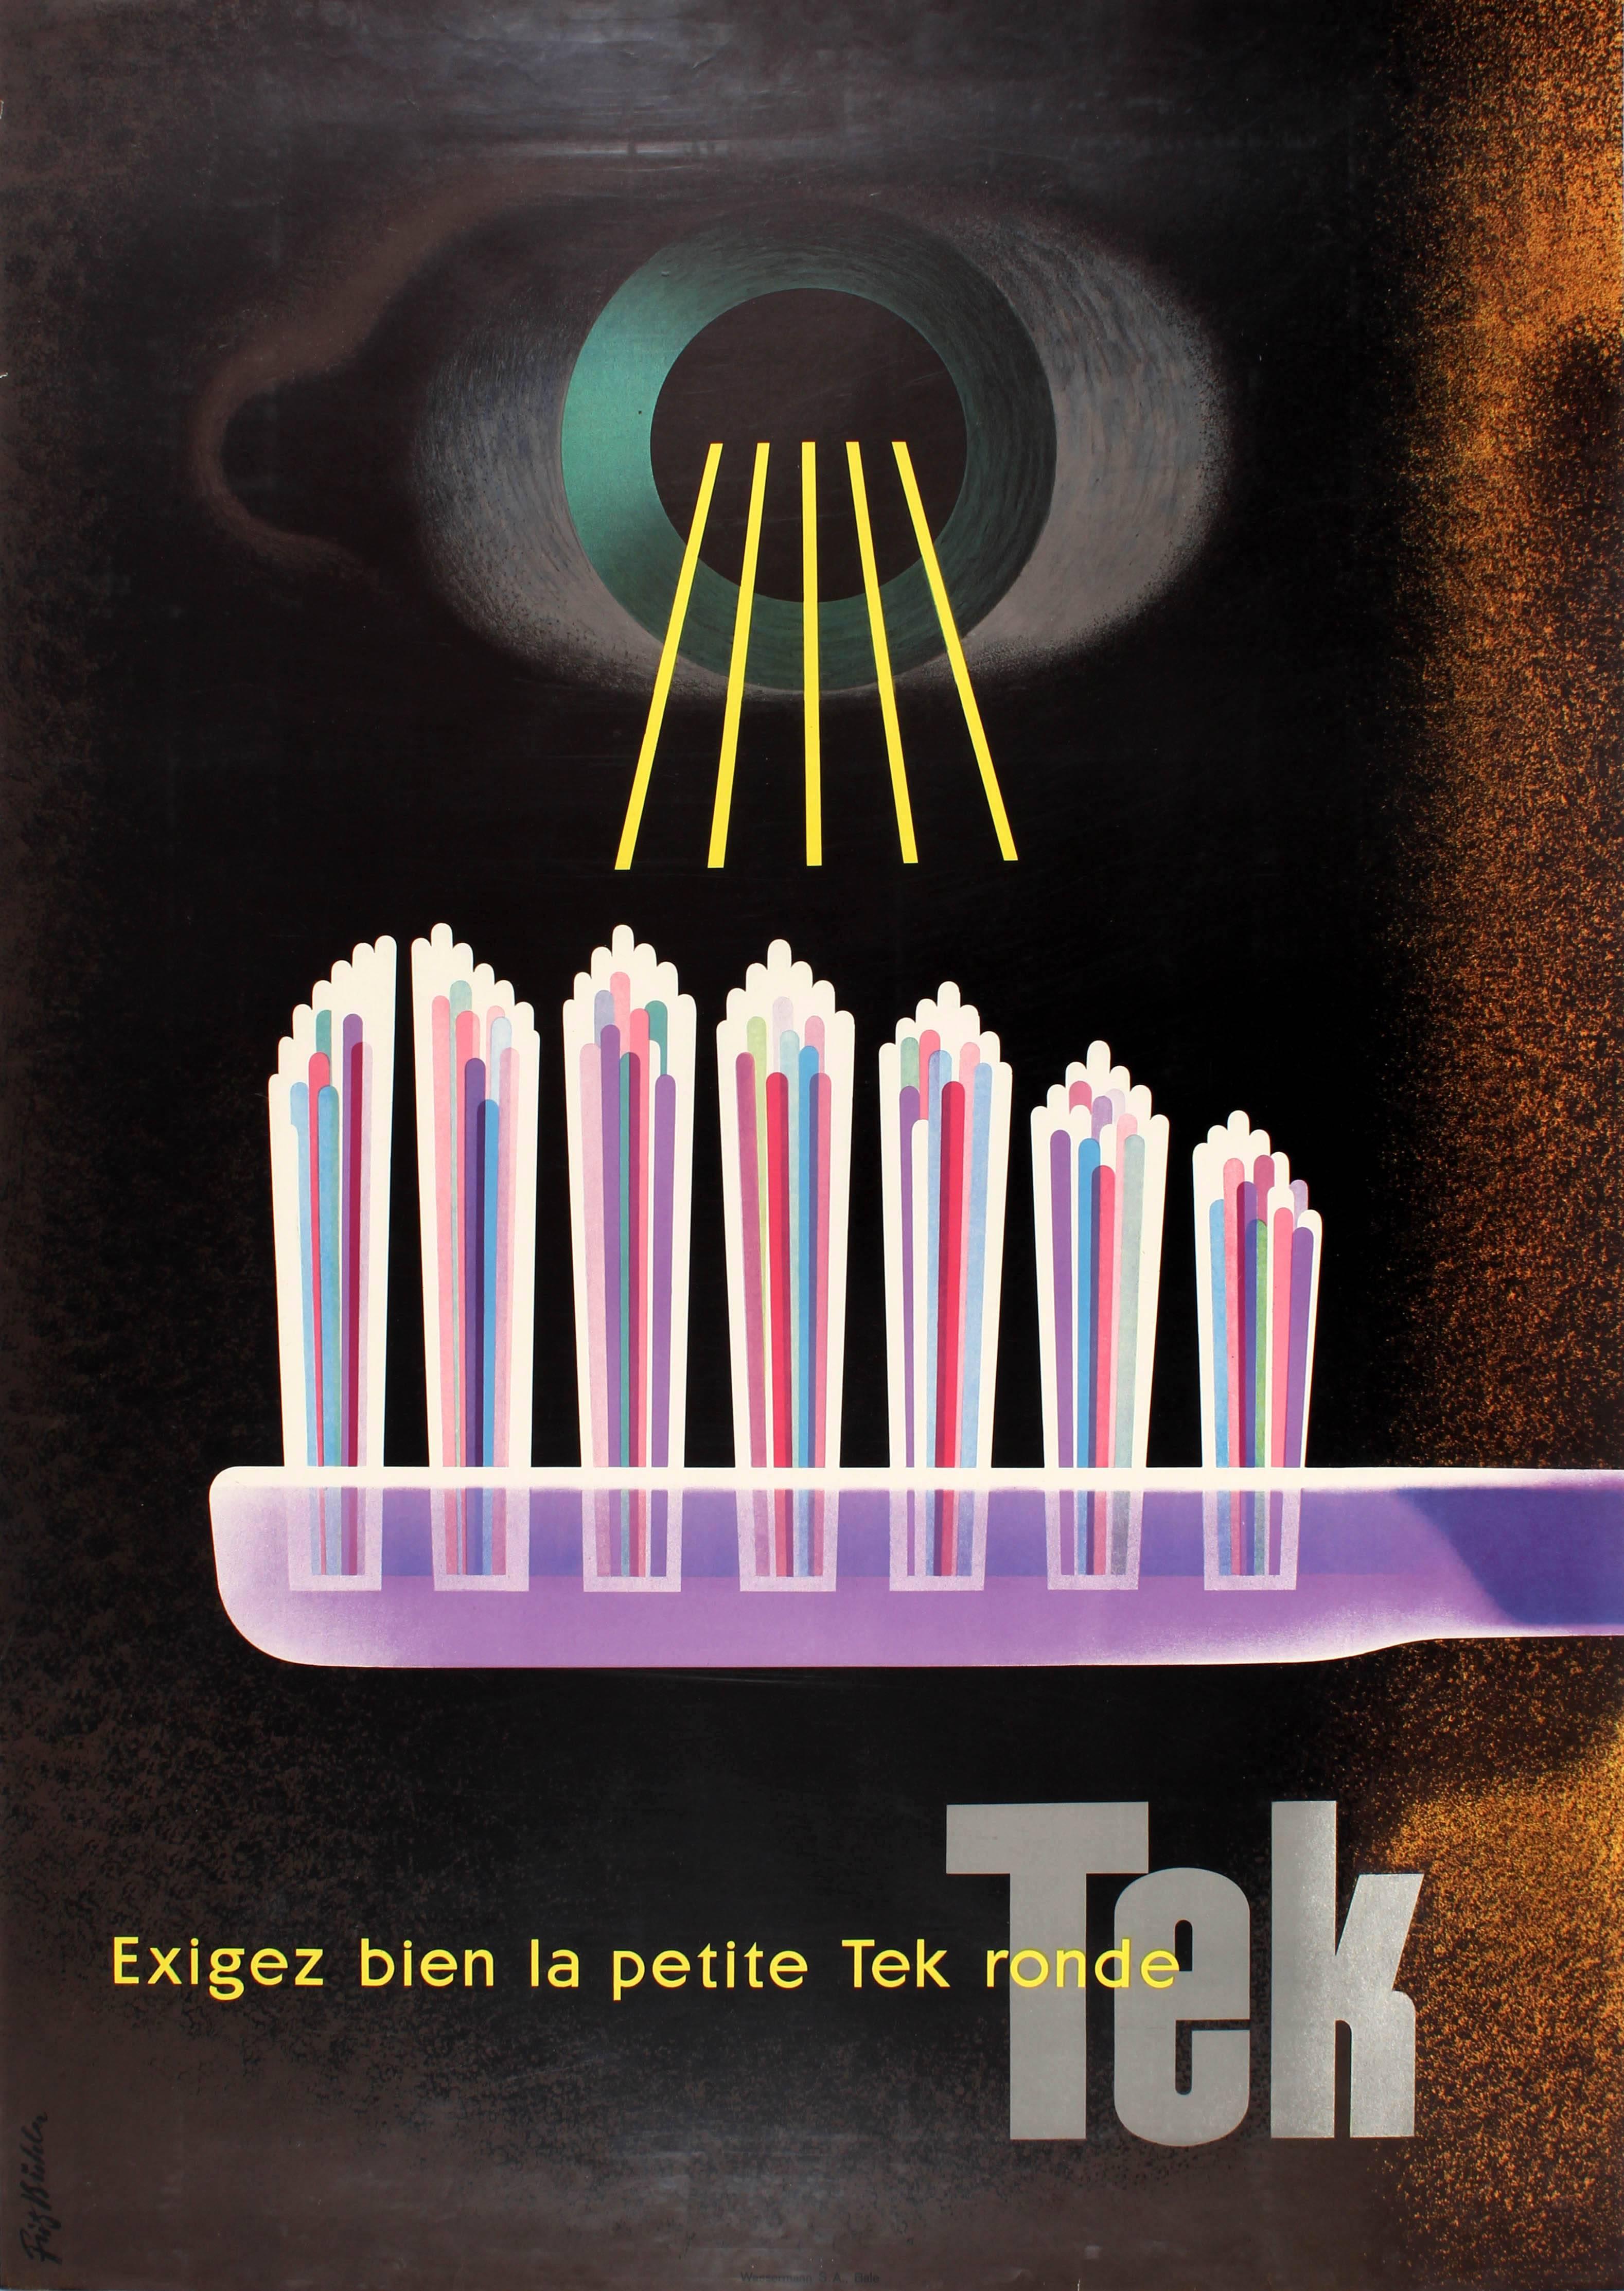 Fritz Bühler Print - Original Vintage Mid-Century Modern Design Advertising Poster For Tek Toothbrush